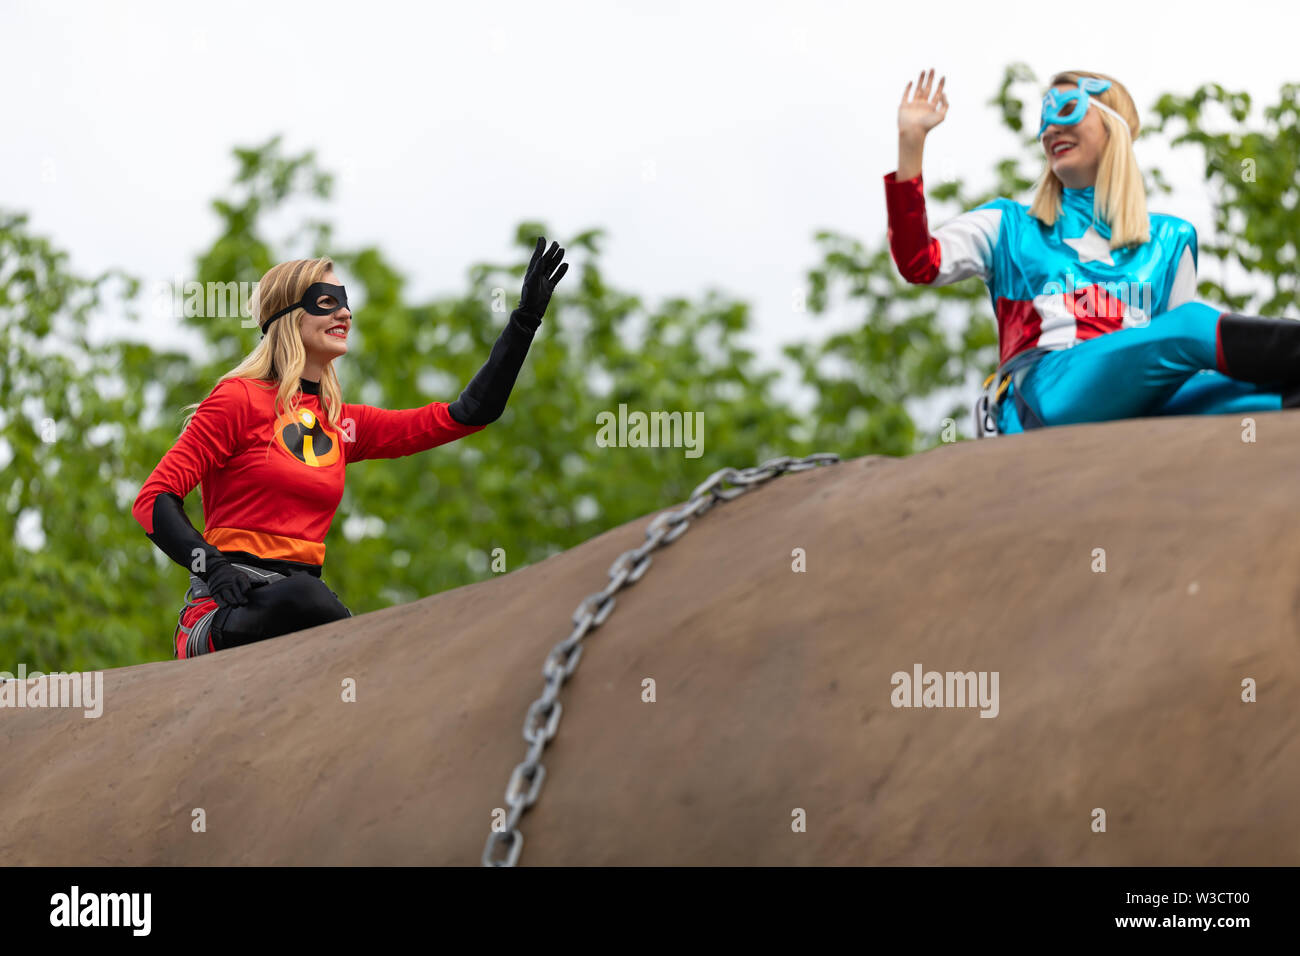 Louisville, Kentucky, USA - May 2, 2019: The Pegasus Parade, Women dress up as superheroes, riding on top of a giant potato during the parade Stock Photo